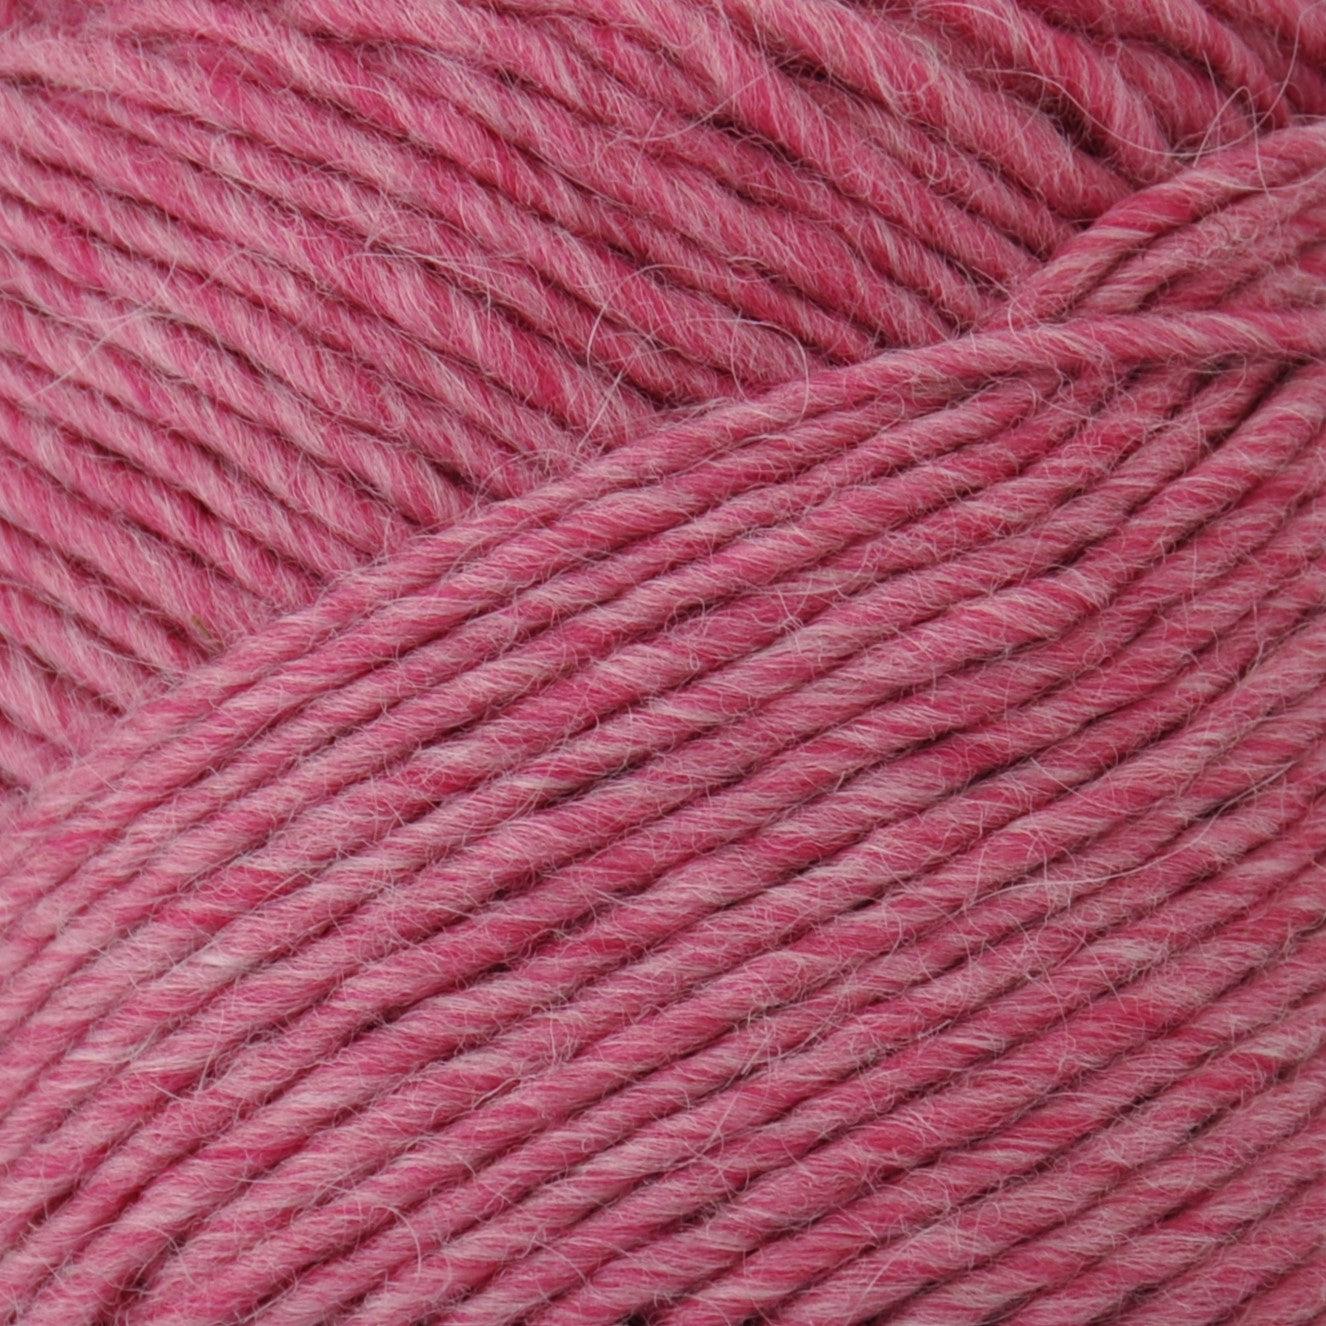 Lamb's Pride Bulky Weight Yarn | 125 Yards | 85% Wool 15% Mohair Blend-Yarn-Brown Sheep Yarn-Mauve Dust - M84-Revolution Fibers